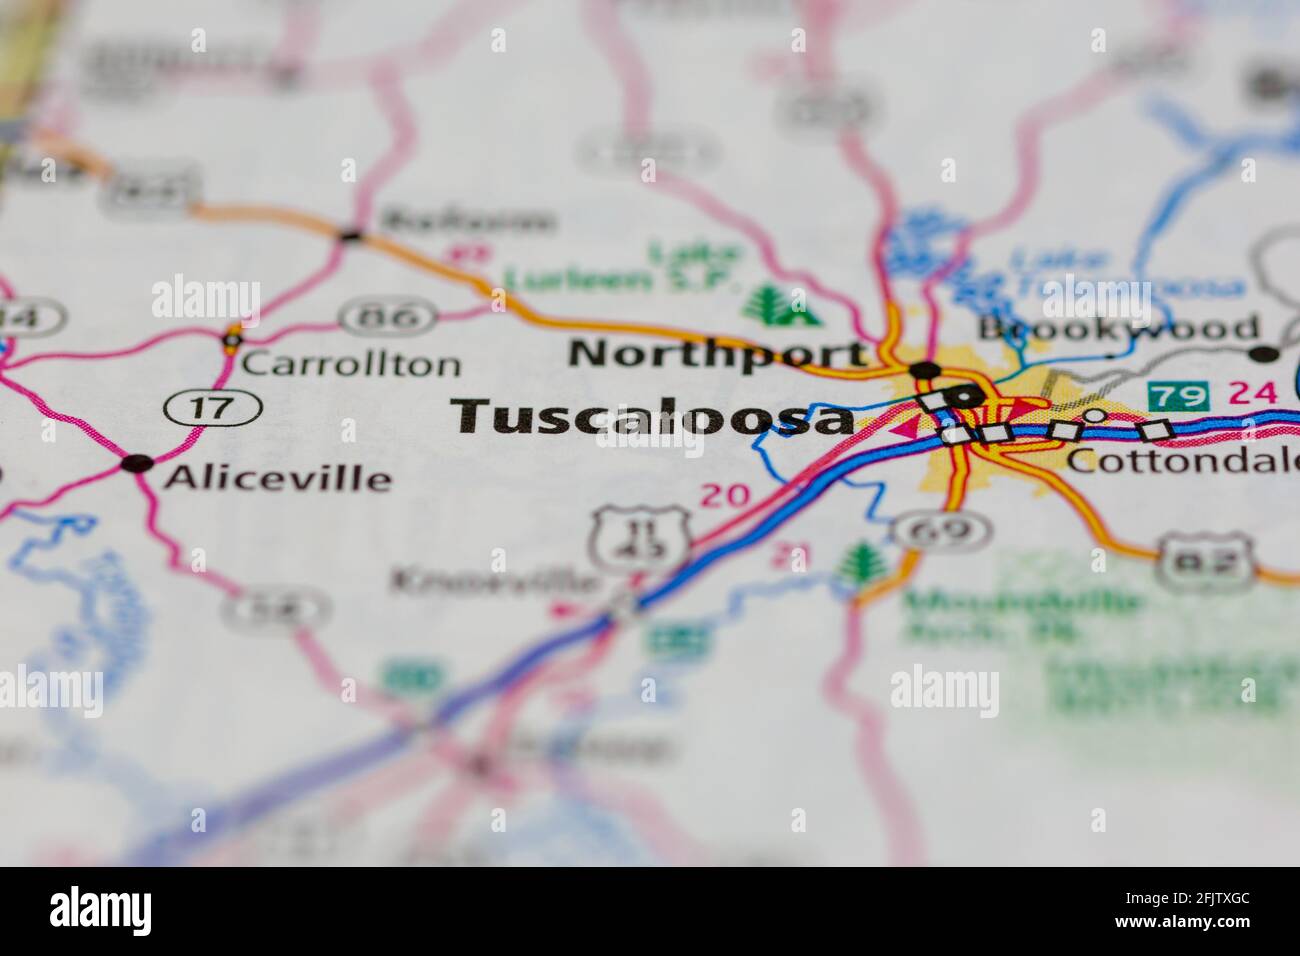 Tuscaloosa Alabama USA mostrato su una mappa stradale o geografia mappa Foto Stock